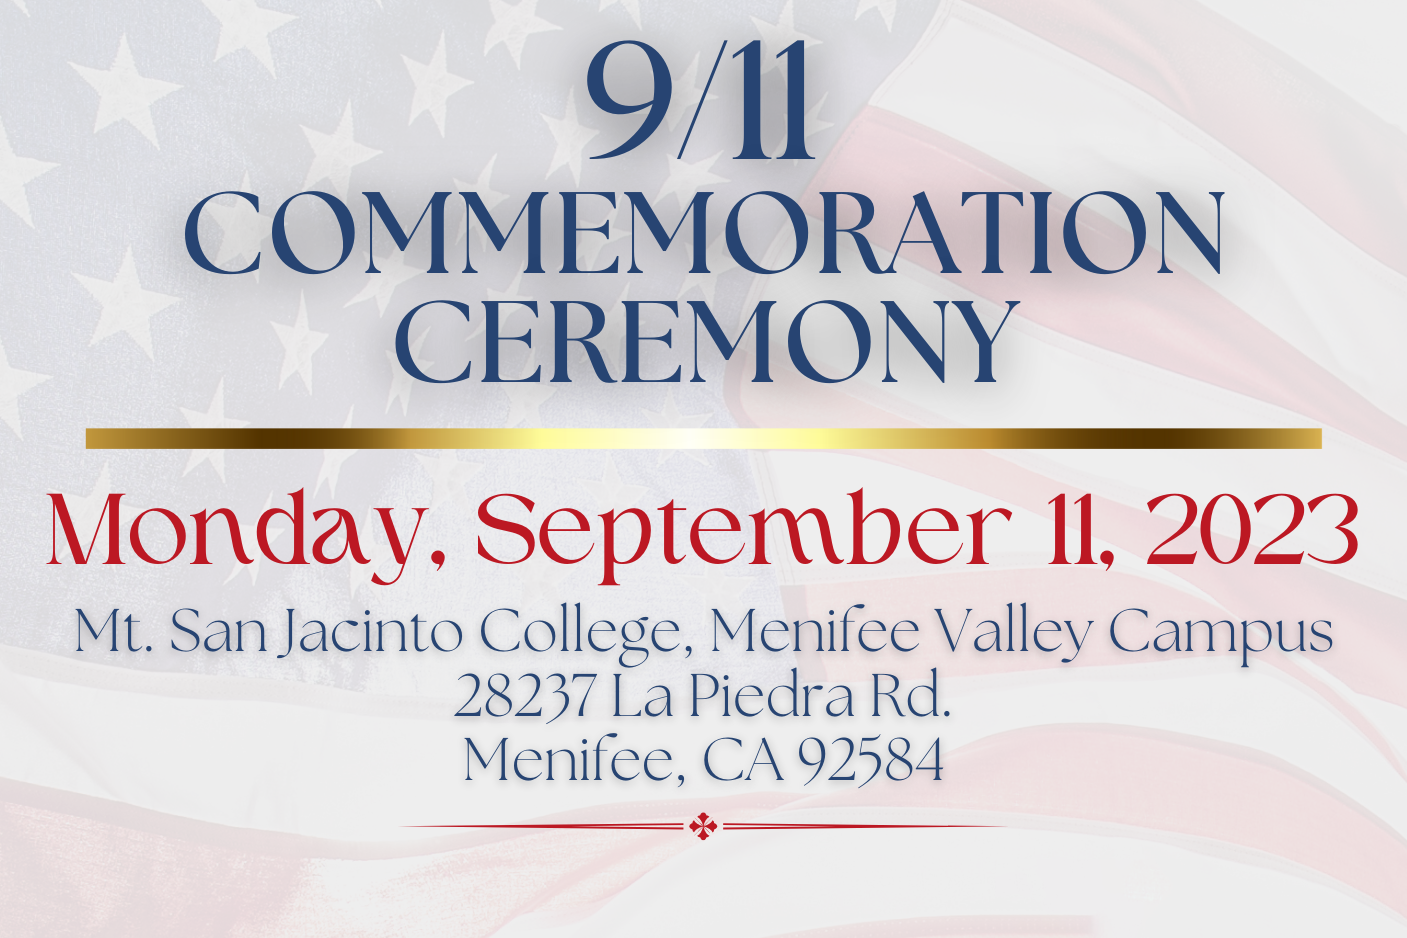 MSJC Menifee Valley Campus Hosts 9/11 Commemoration Ceremony